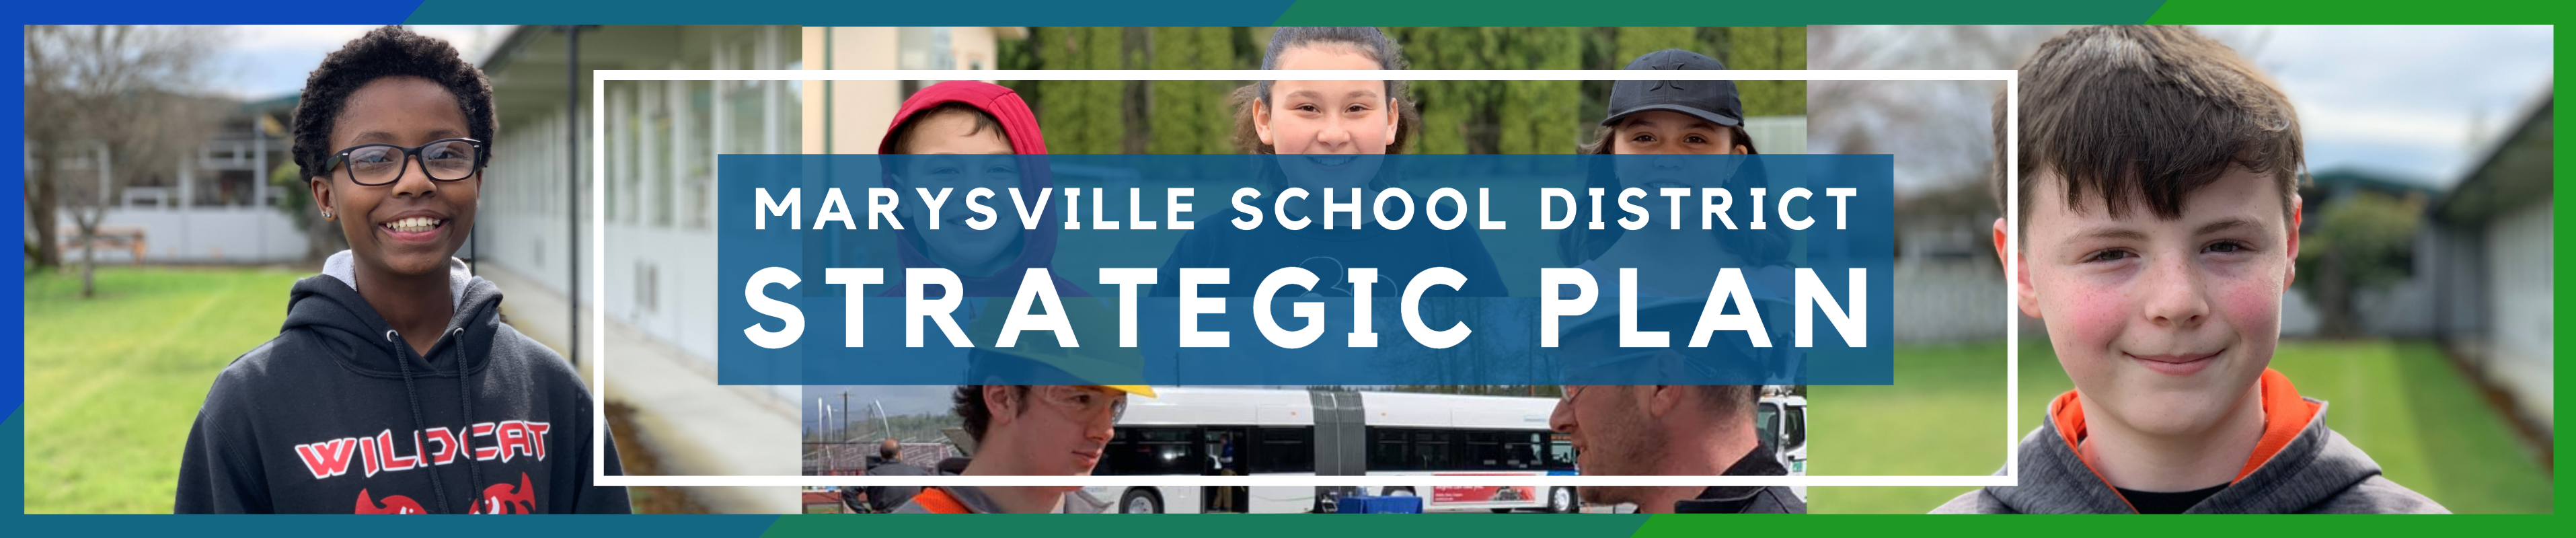 Marysville School District Strategic Plan